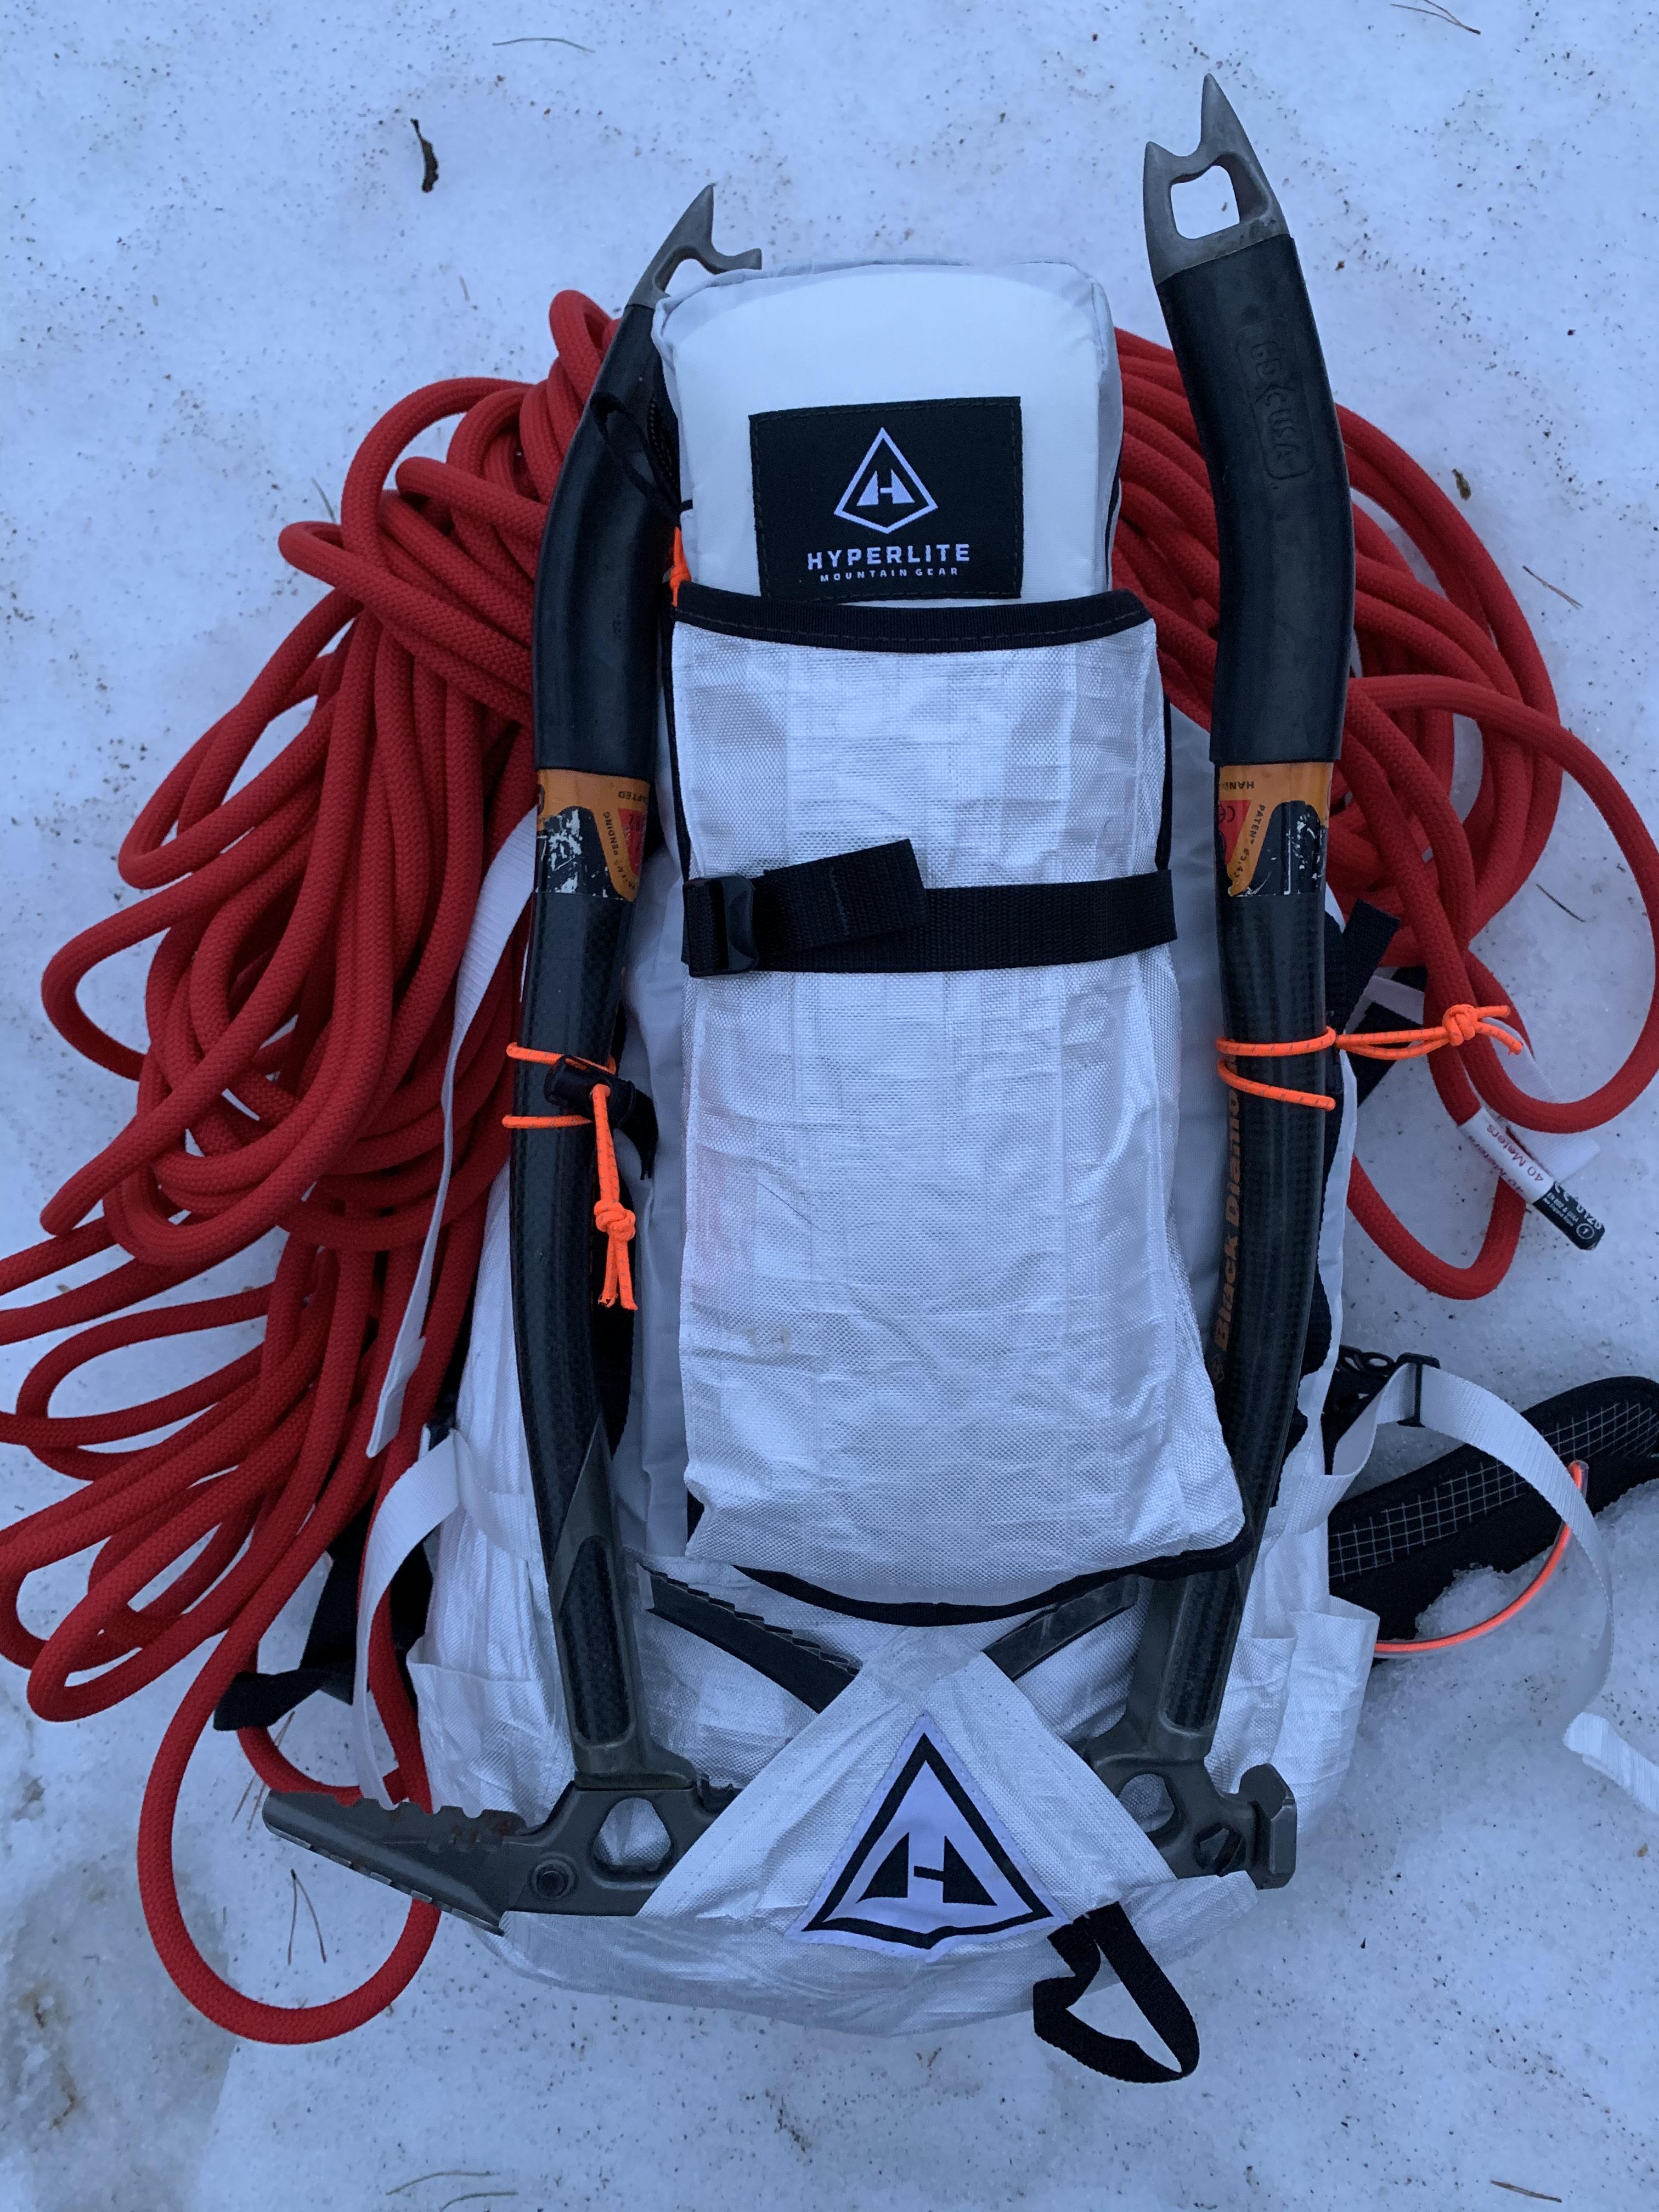 Hyperlite Mountain Gear Prism Alpine Climbing Kit Reviews Trailspace